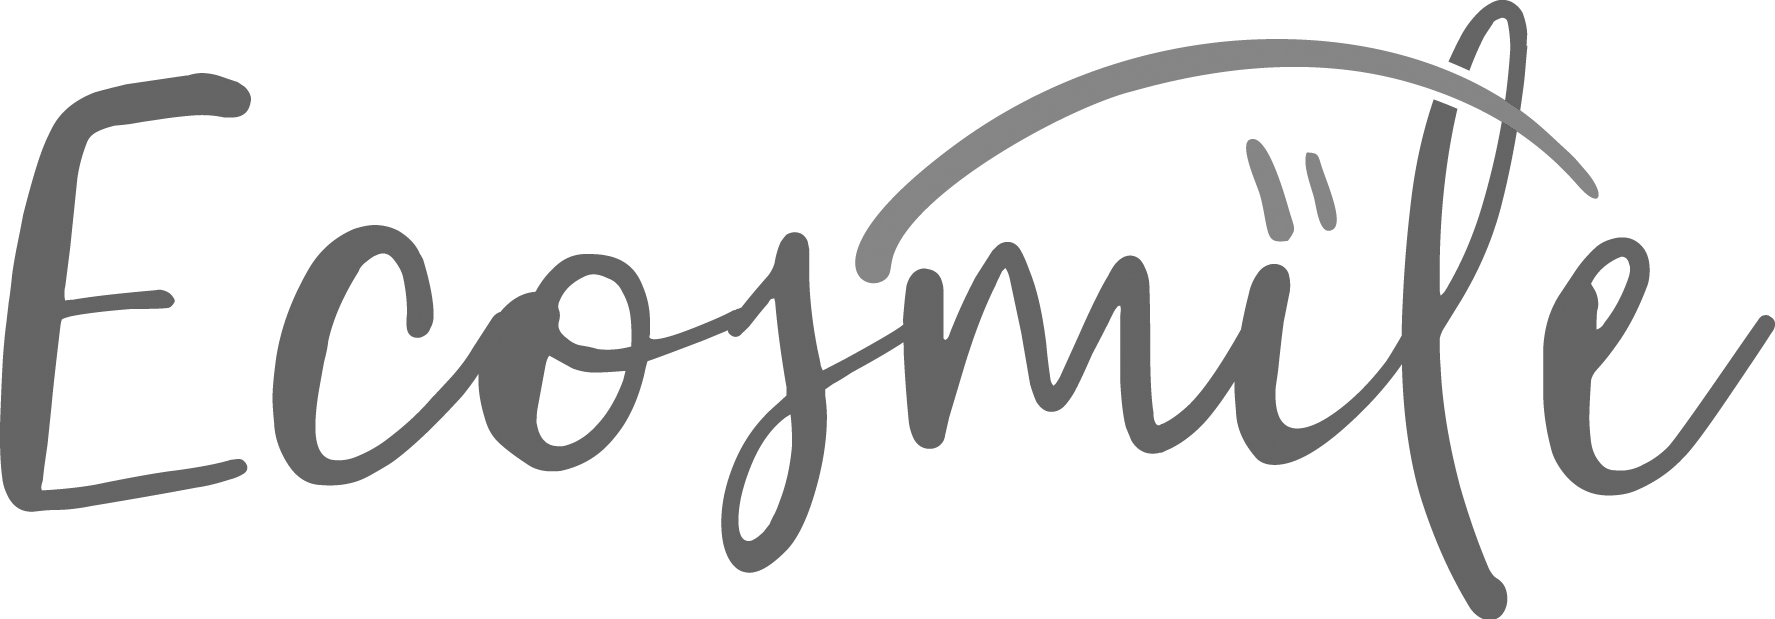 Ecosmile footer logo